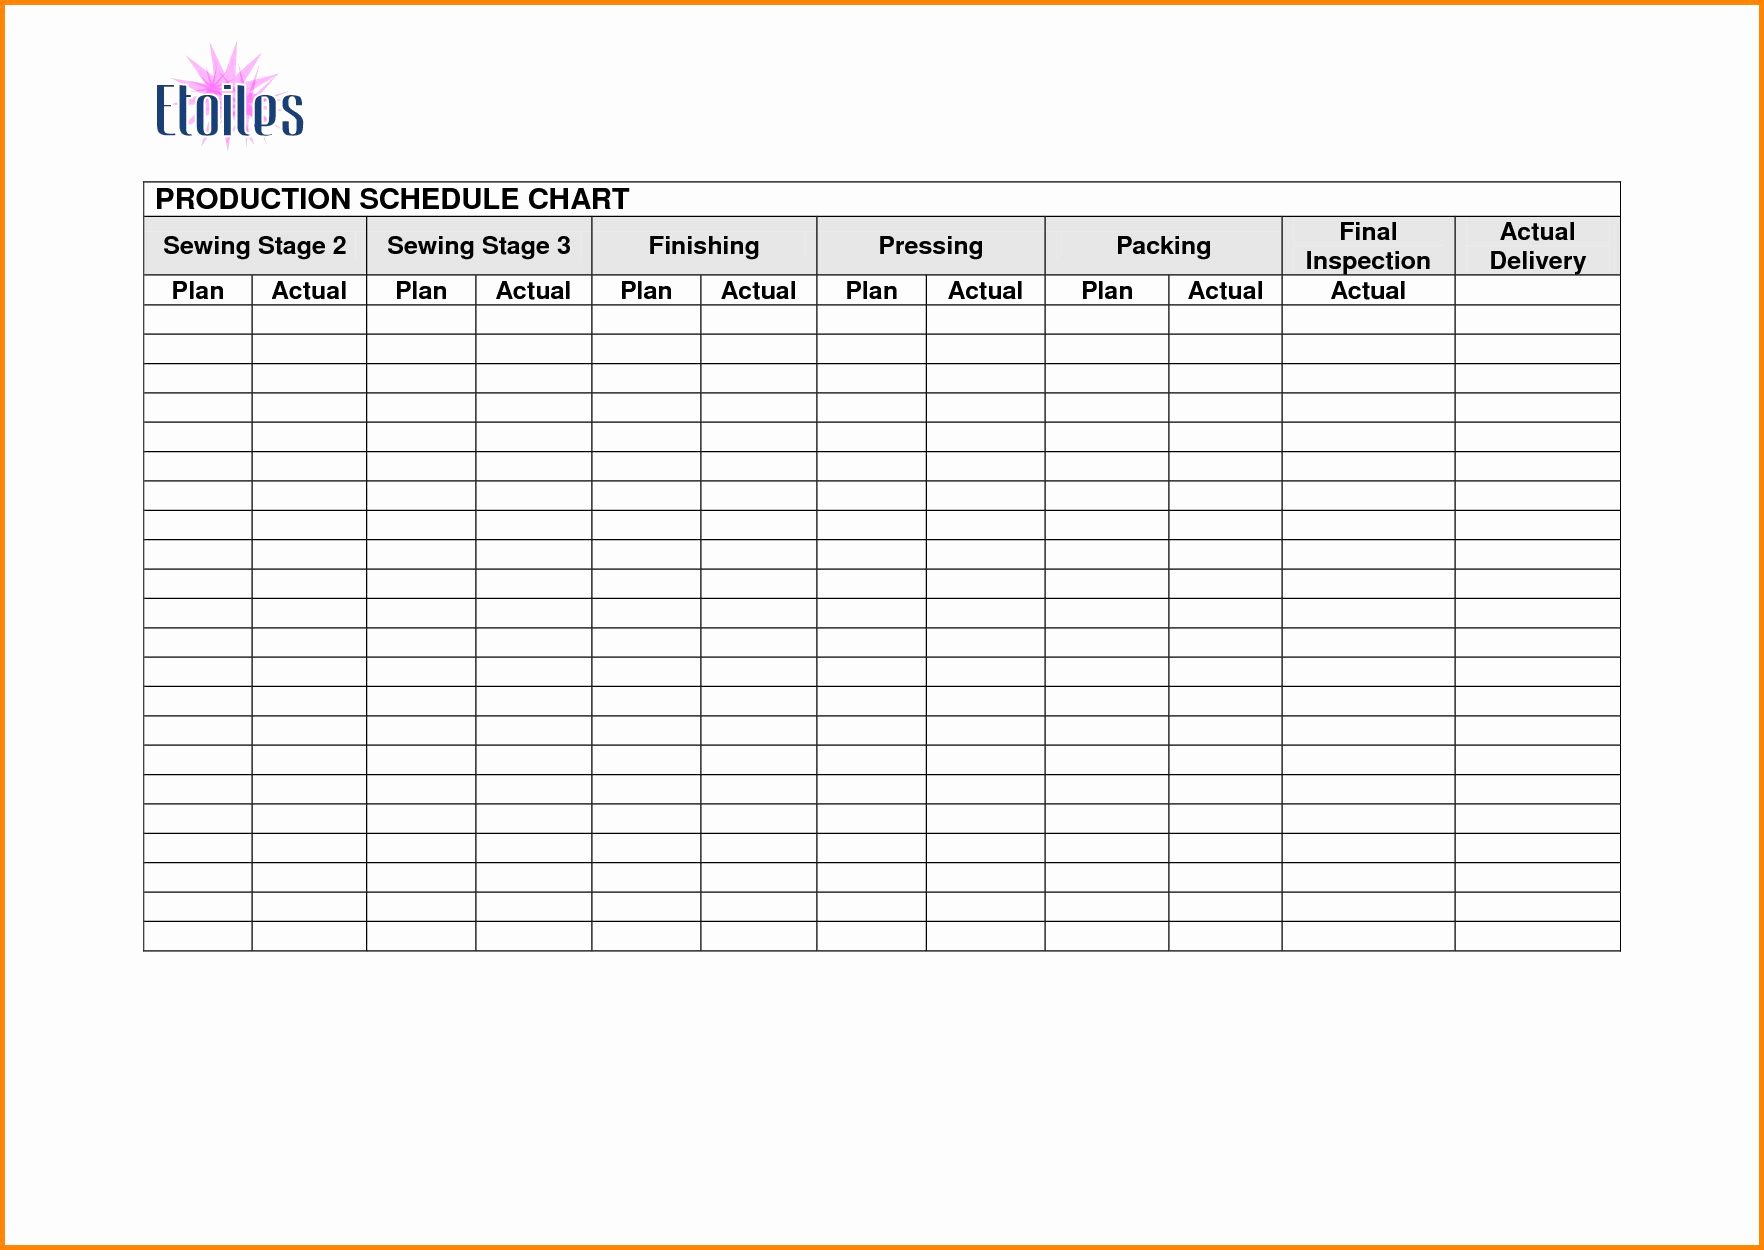 Daily Production Report Template Excel Unique Production Report Template Excel Monthly Example Daily